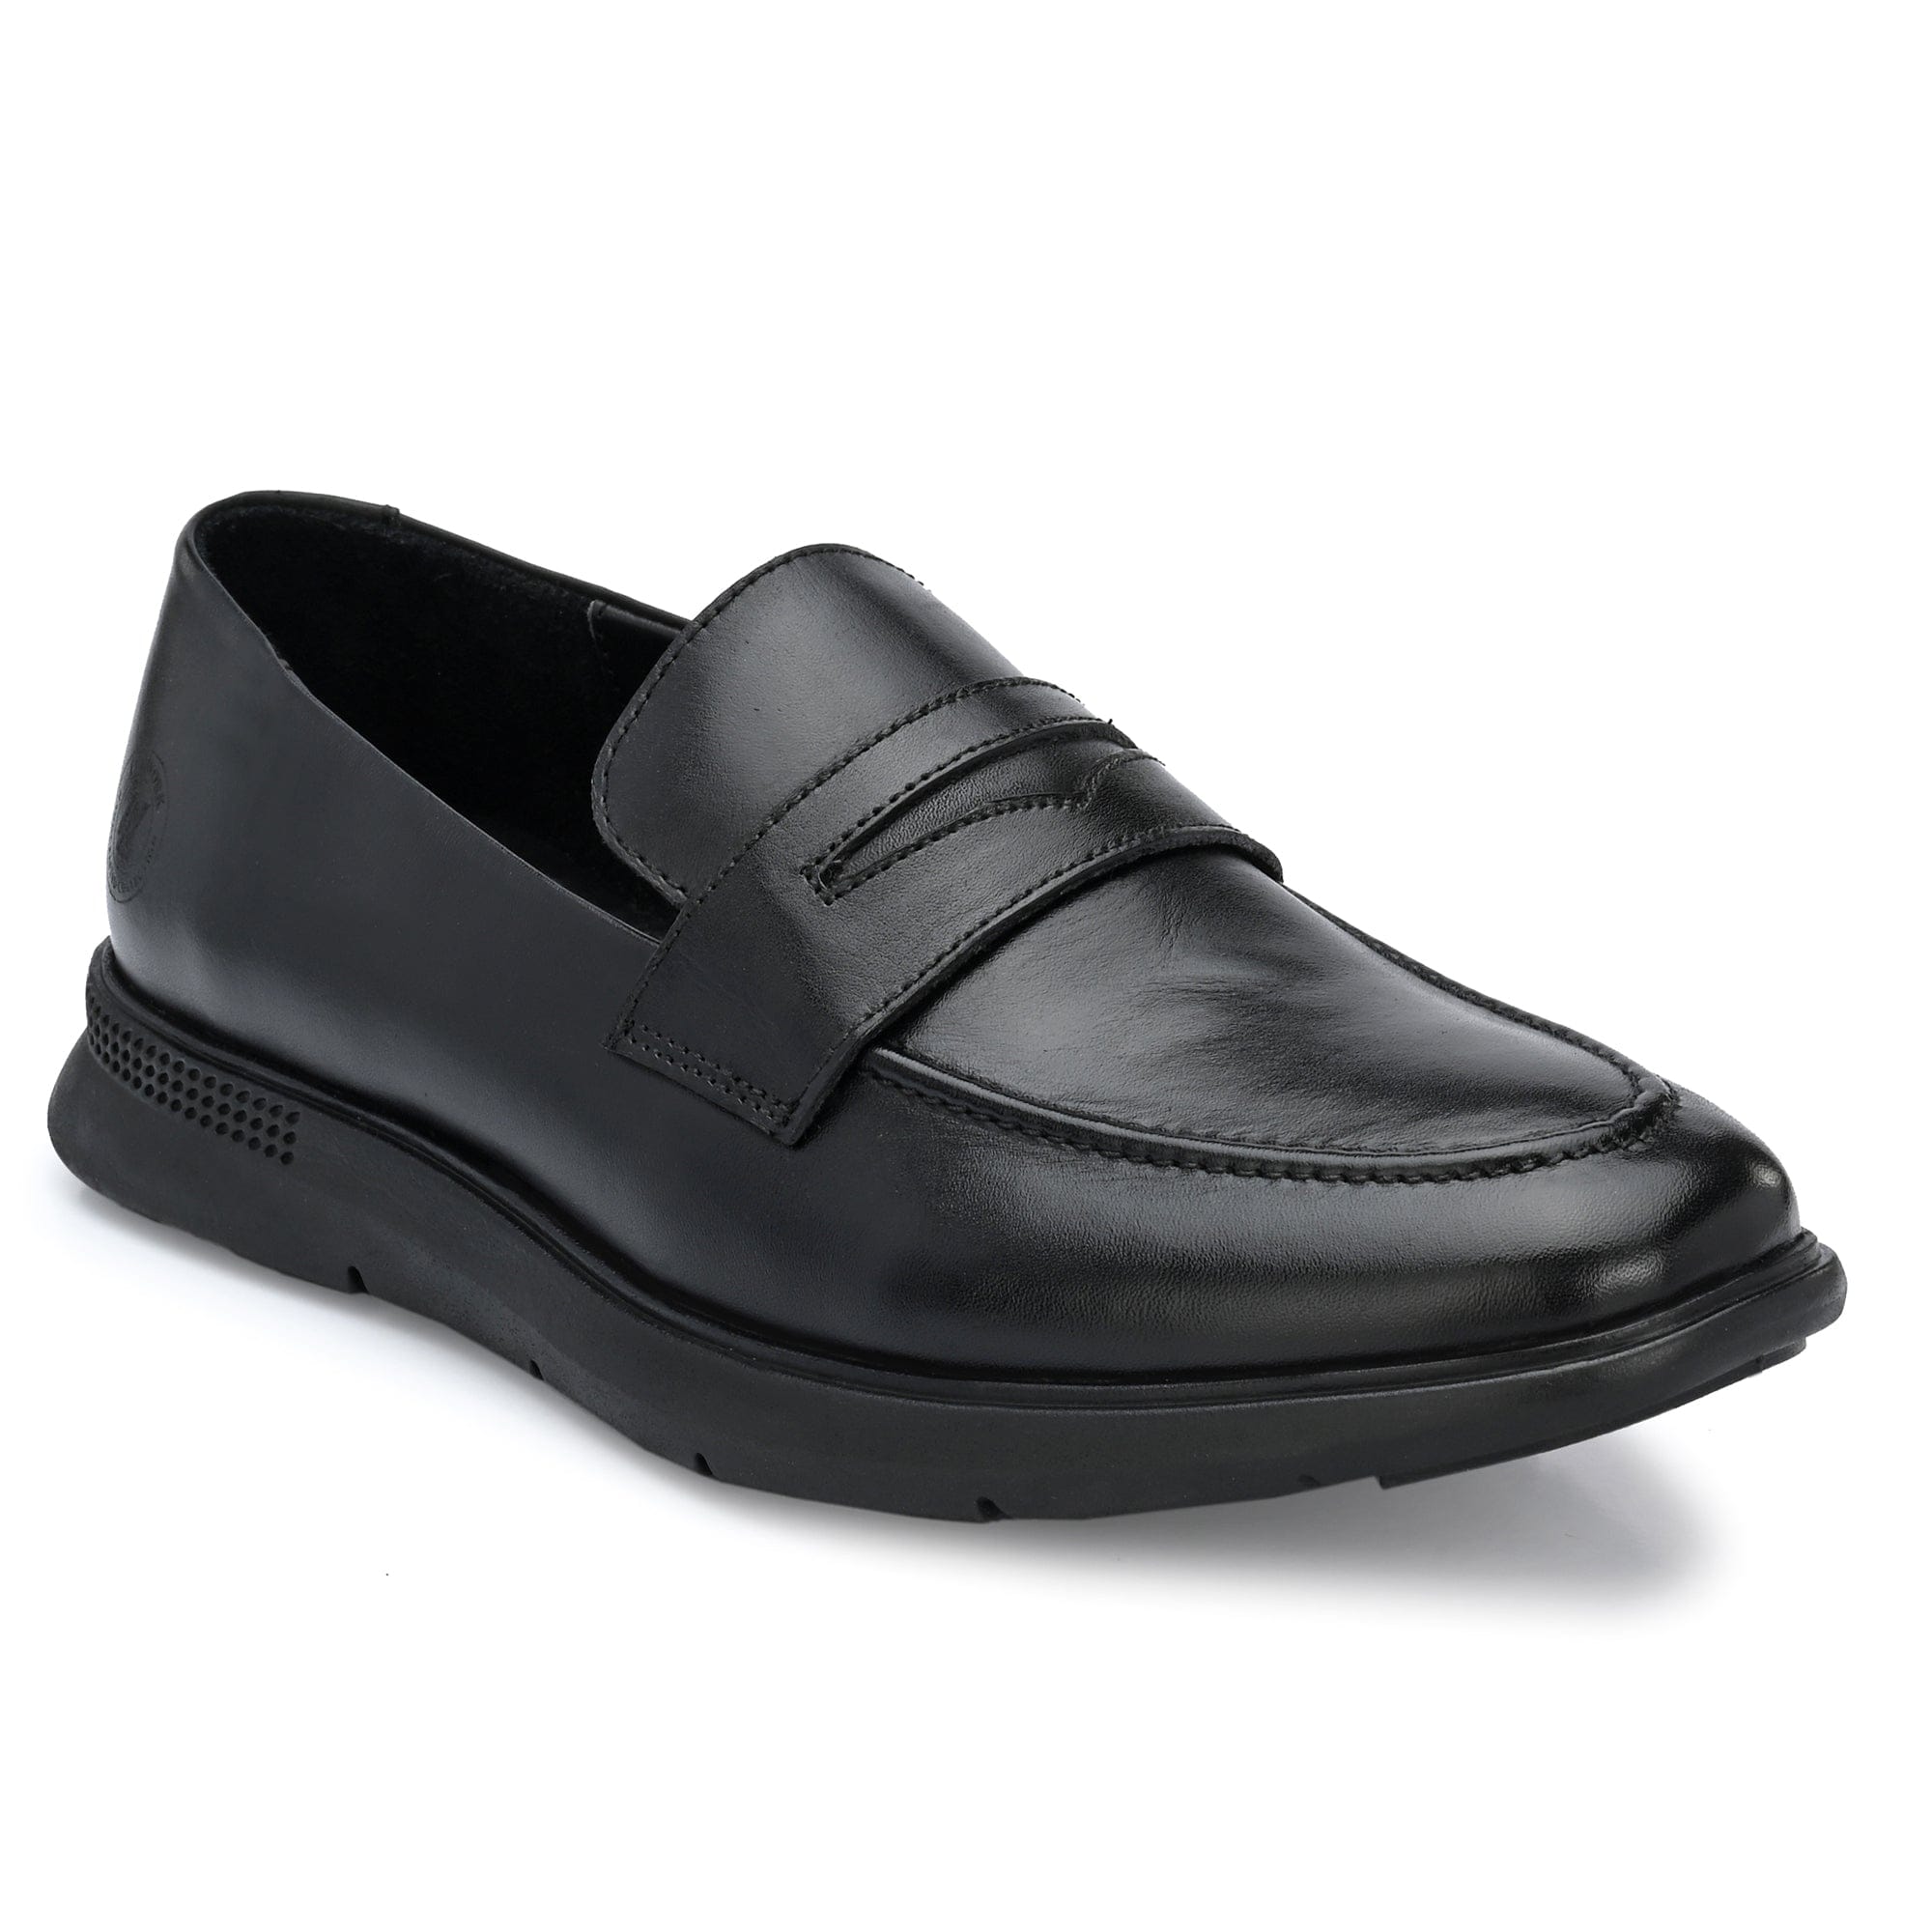 Legwork Loafer 2.0 Black Italian Leather Shoes